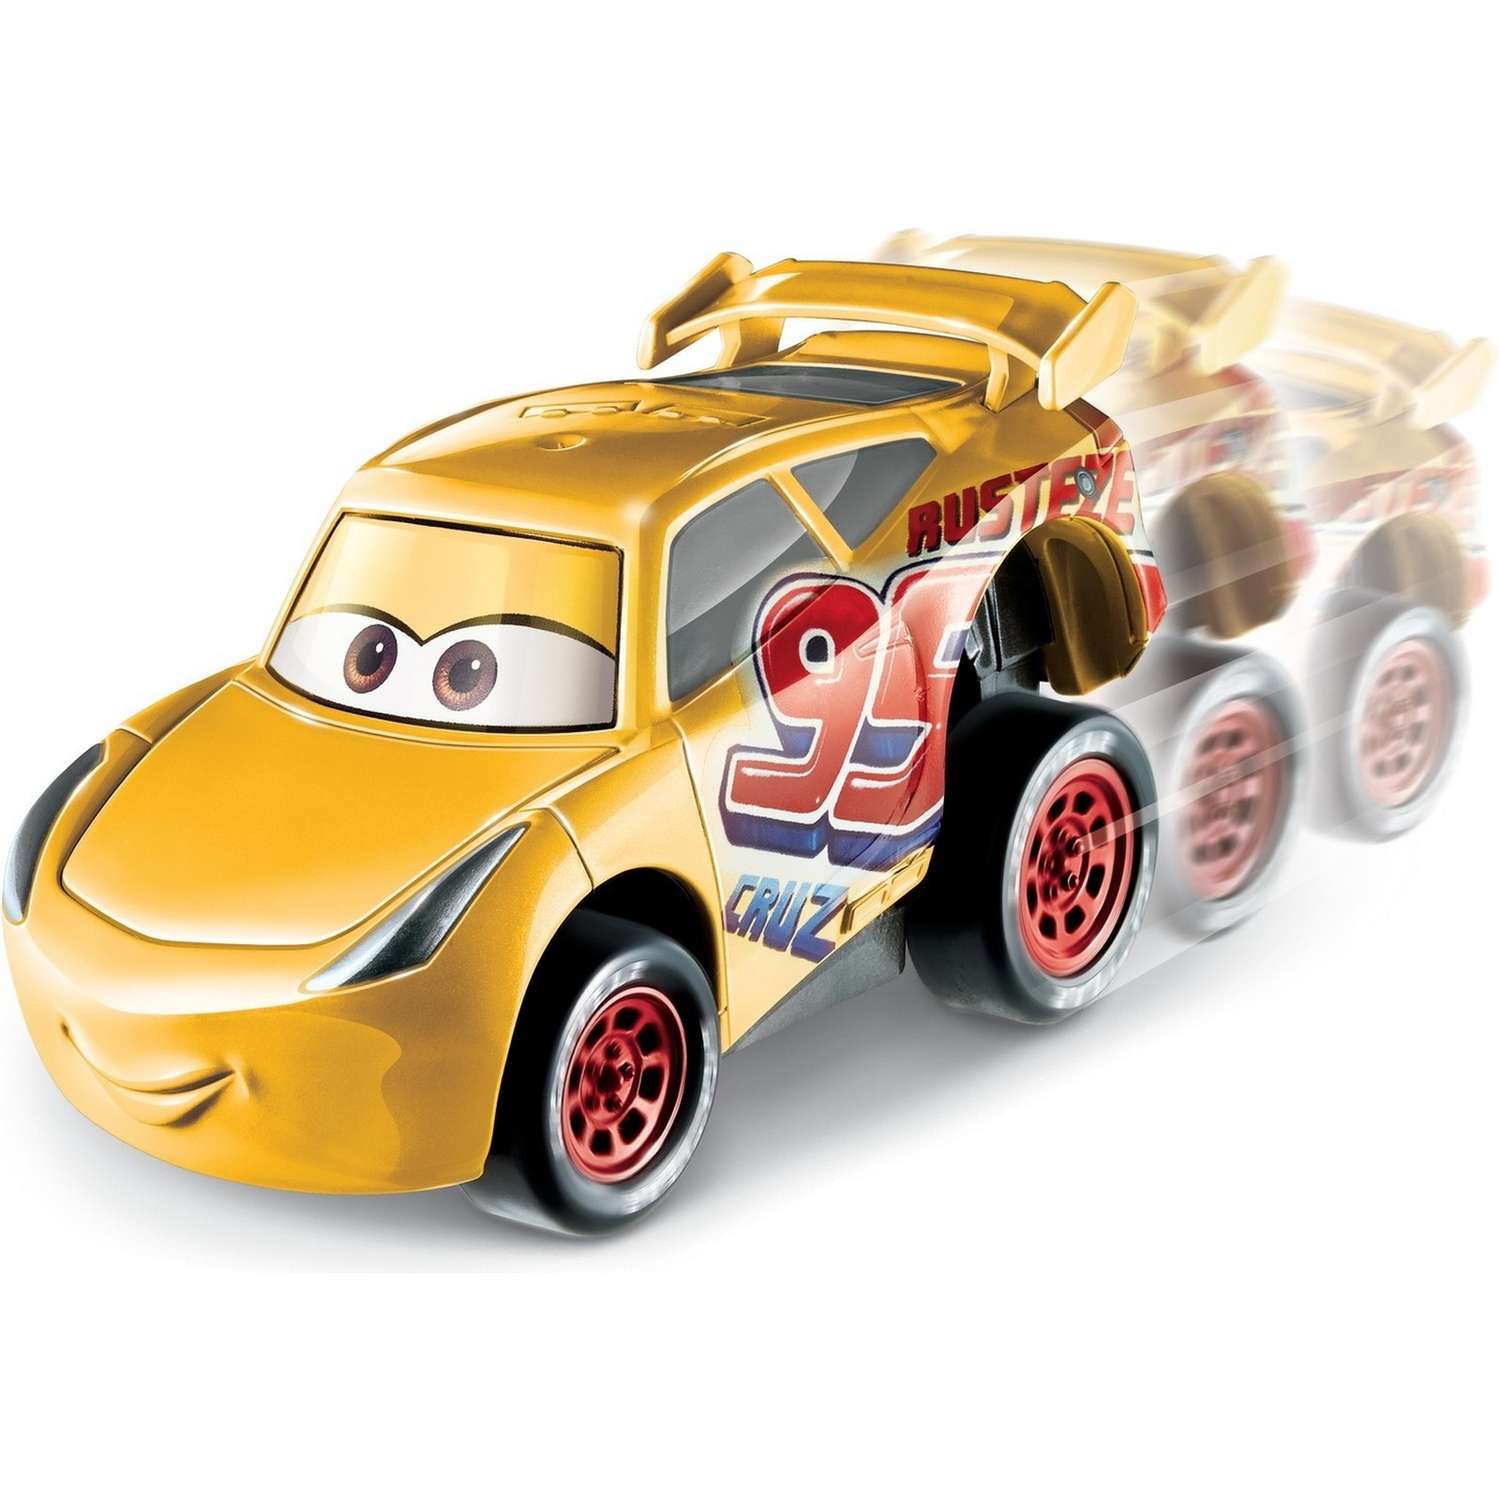 Машина Cars Тачки 3 с автоподзаводом Ржавей-ка Круз Рамирез FMH51 DVD31 - фото 8